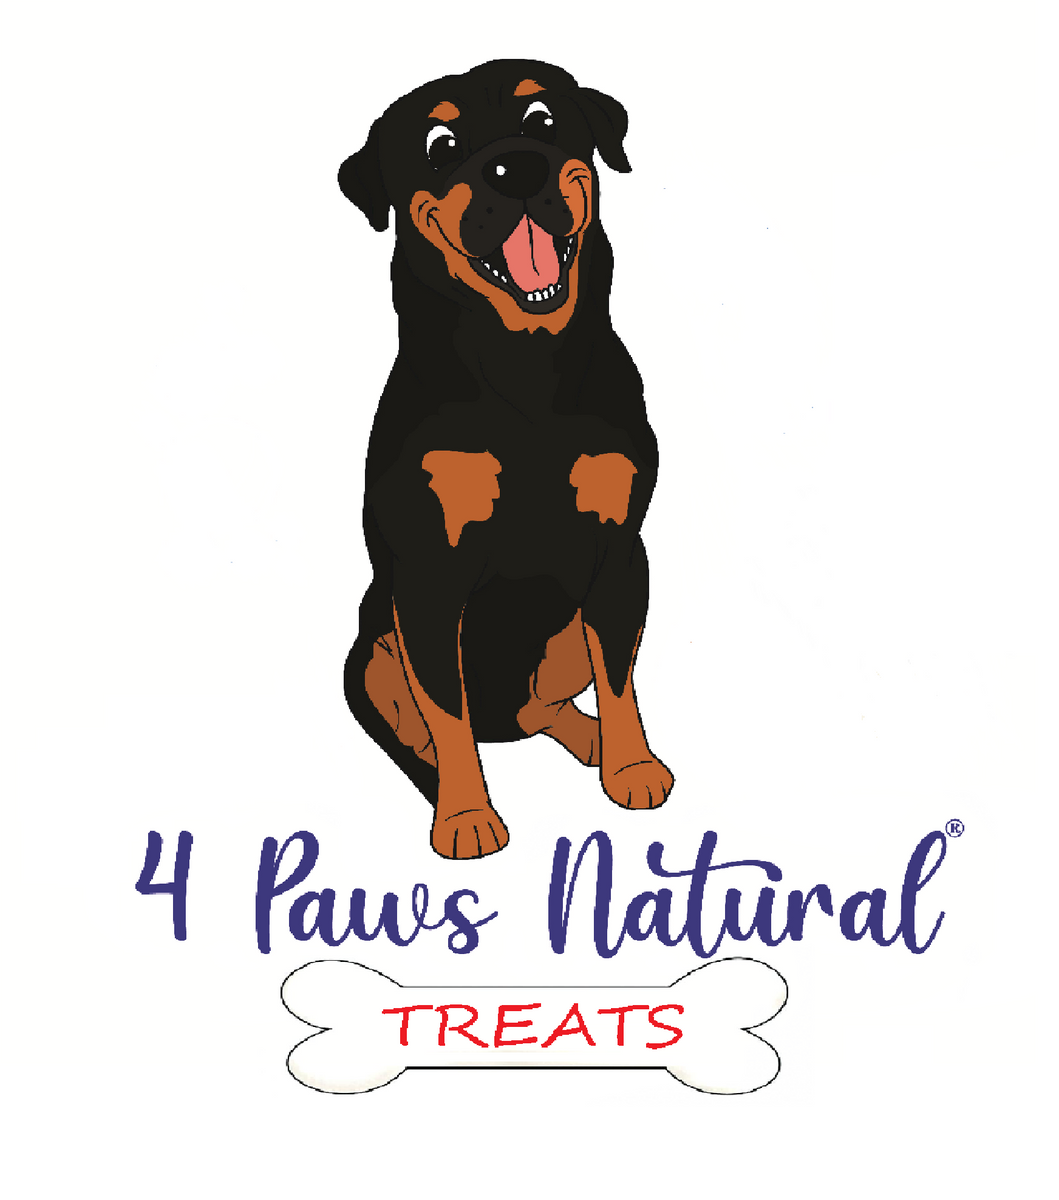 Dog treats – 4 Paws Natural Treats